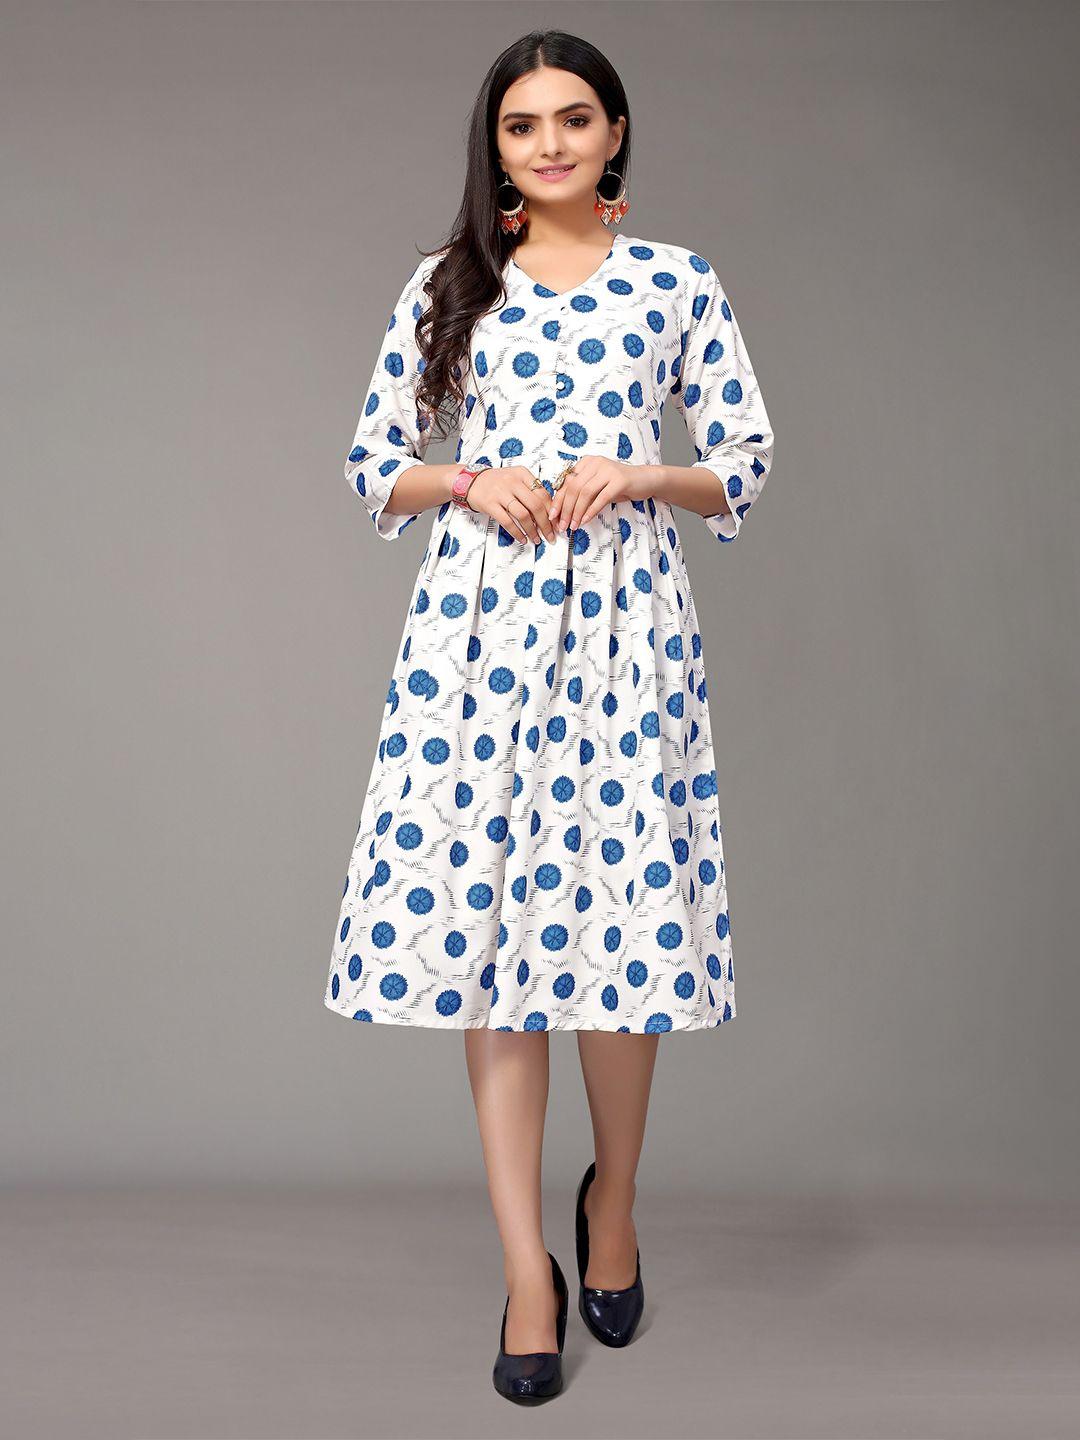 nimayaa off white & blue polka dot printed crepe dress